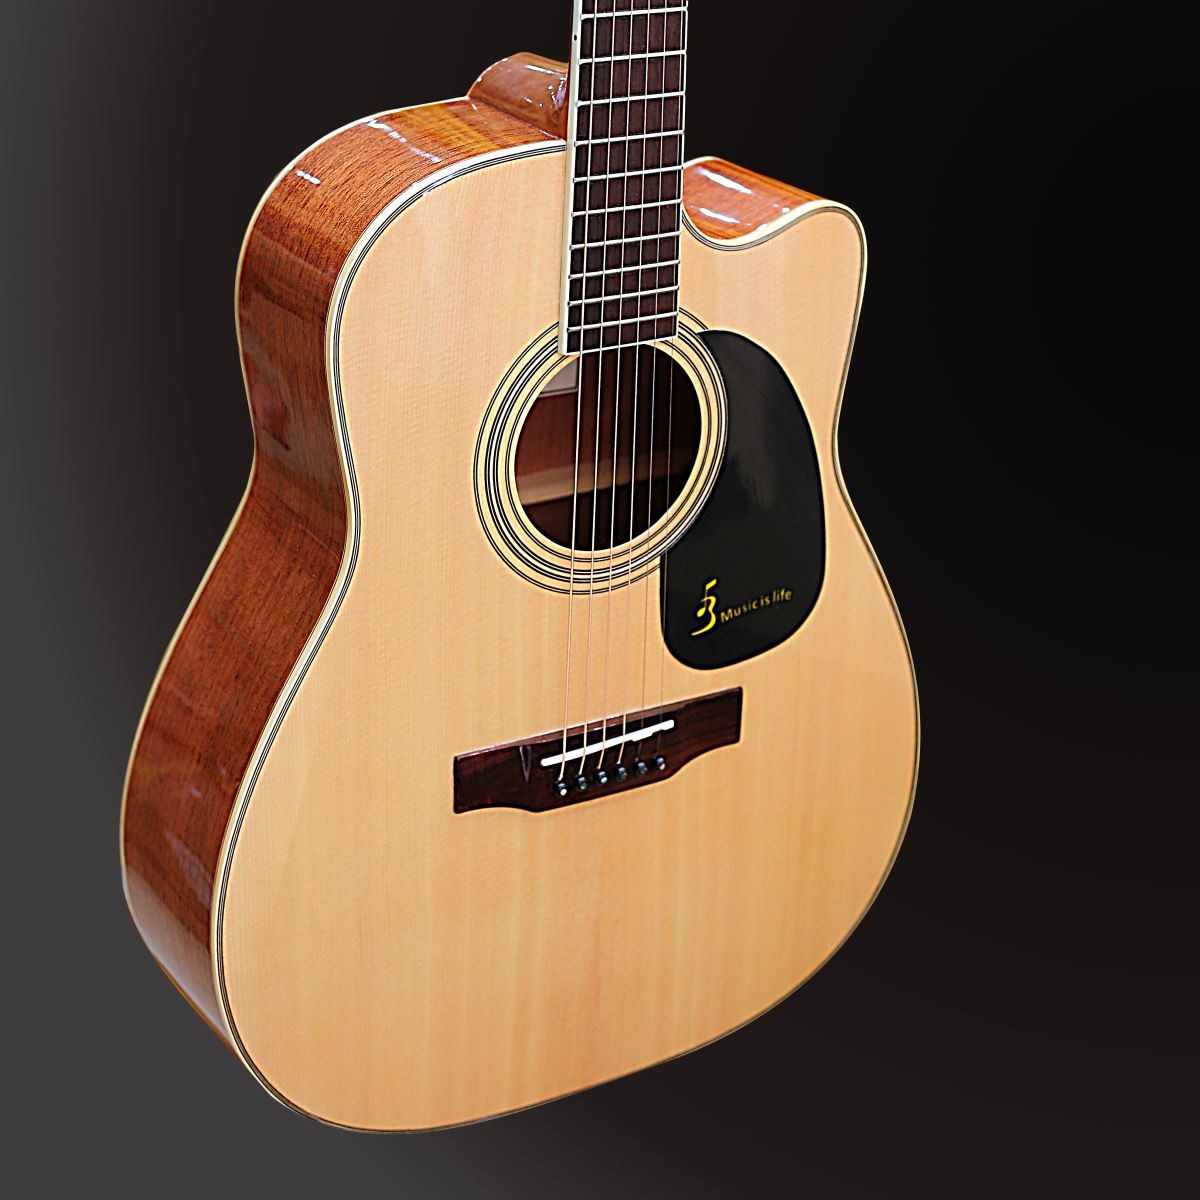 Đàn Guitar Acoustic Ba Đờn J260